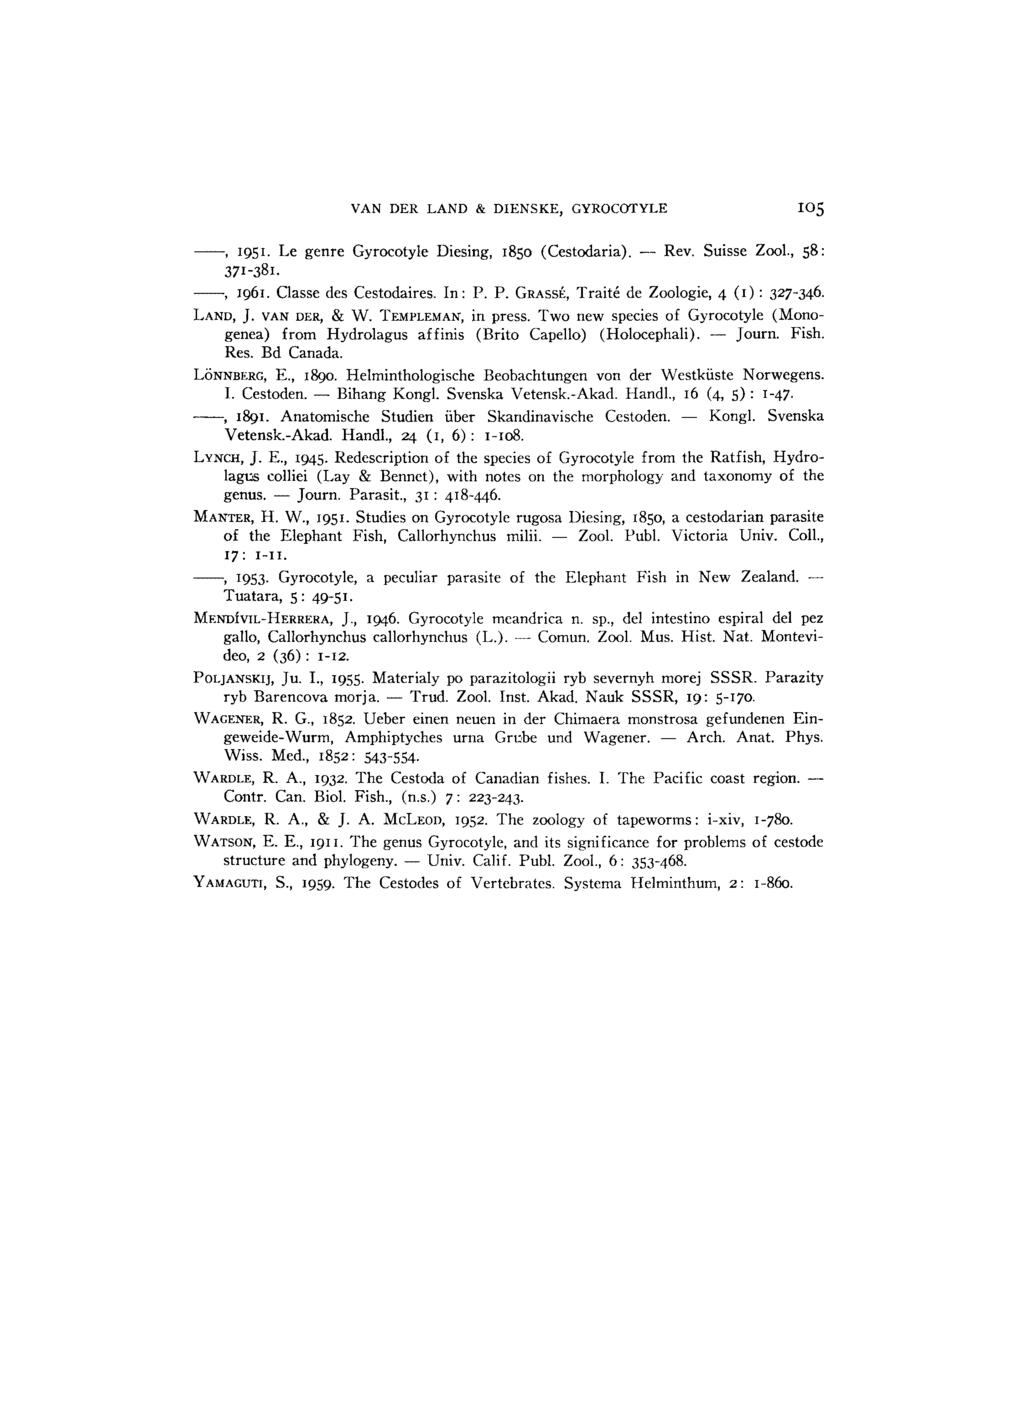 VAN DER LAND & DIENSKE, GYROCOTYLE, IQ5I. Le genre Gyrocotyle Diesing, 1850 (Cestodaria). Rev. Suisse Zool., 58: 371 381., 1961. Classe des Cestodaires. In: P.